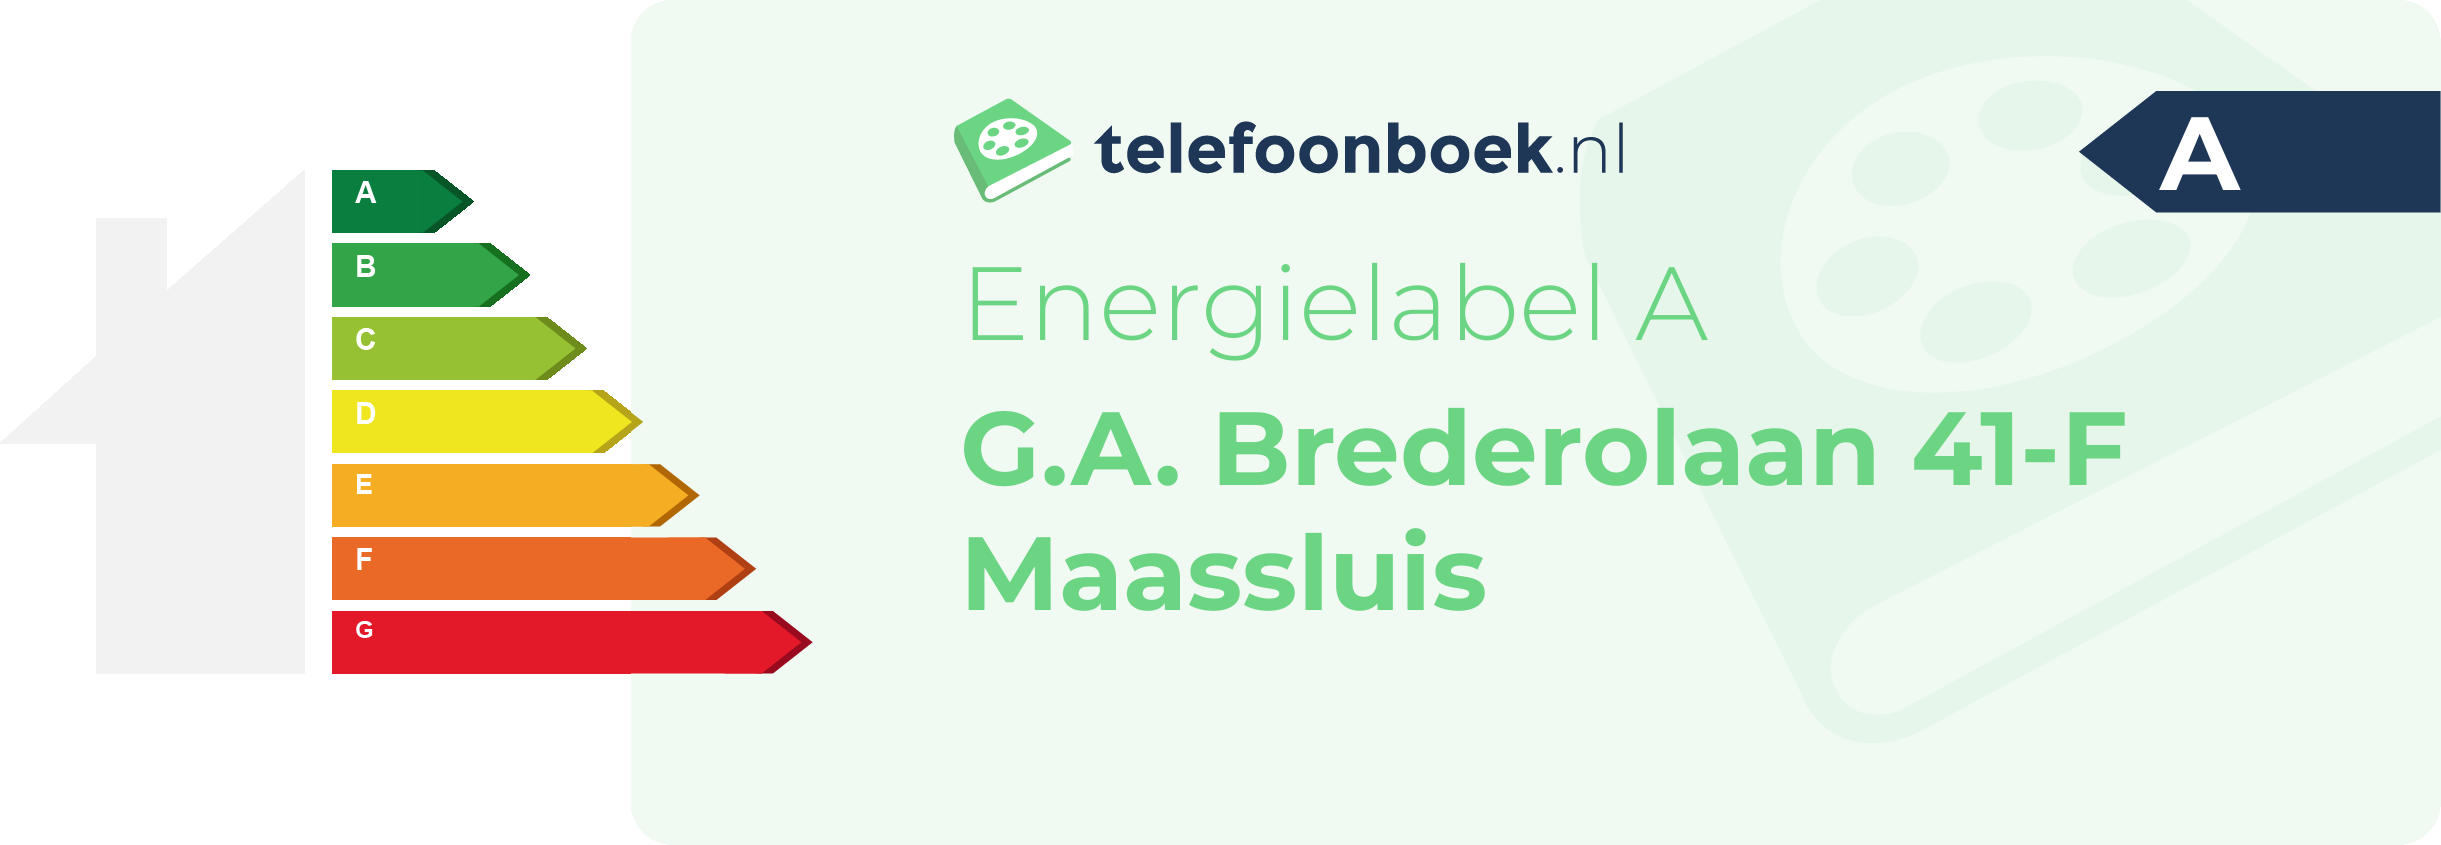 Energielabel G.A. Brederolaan 41-F Maassluis